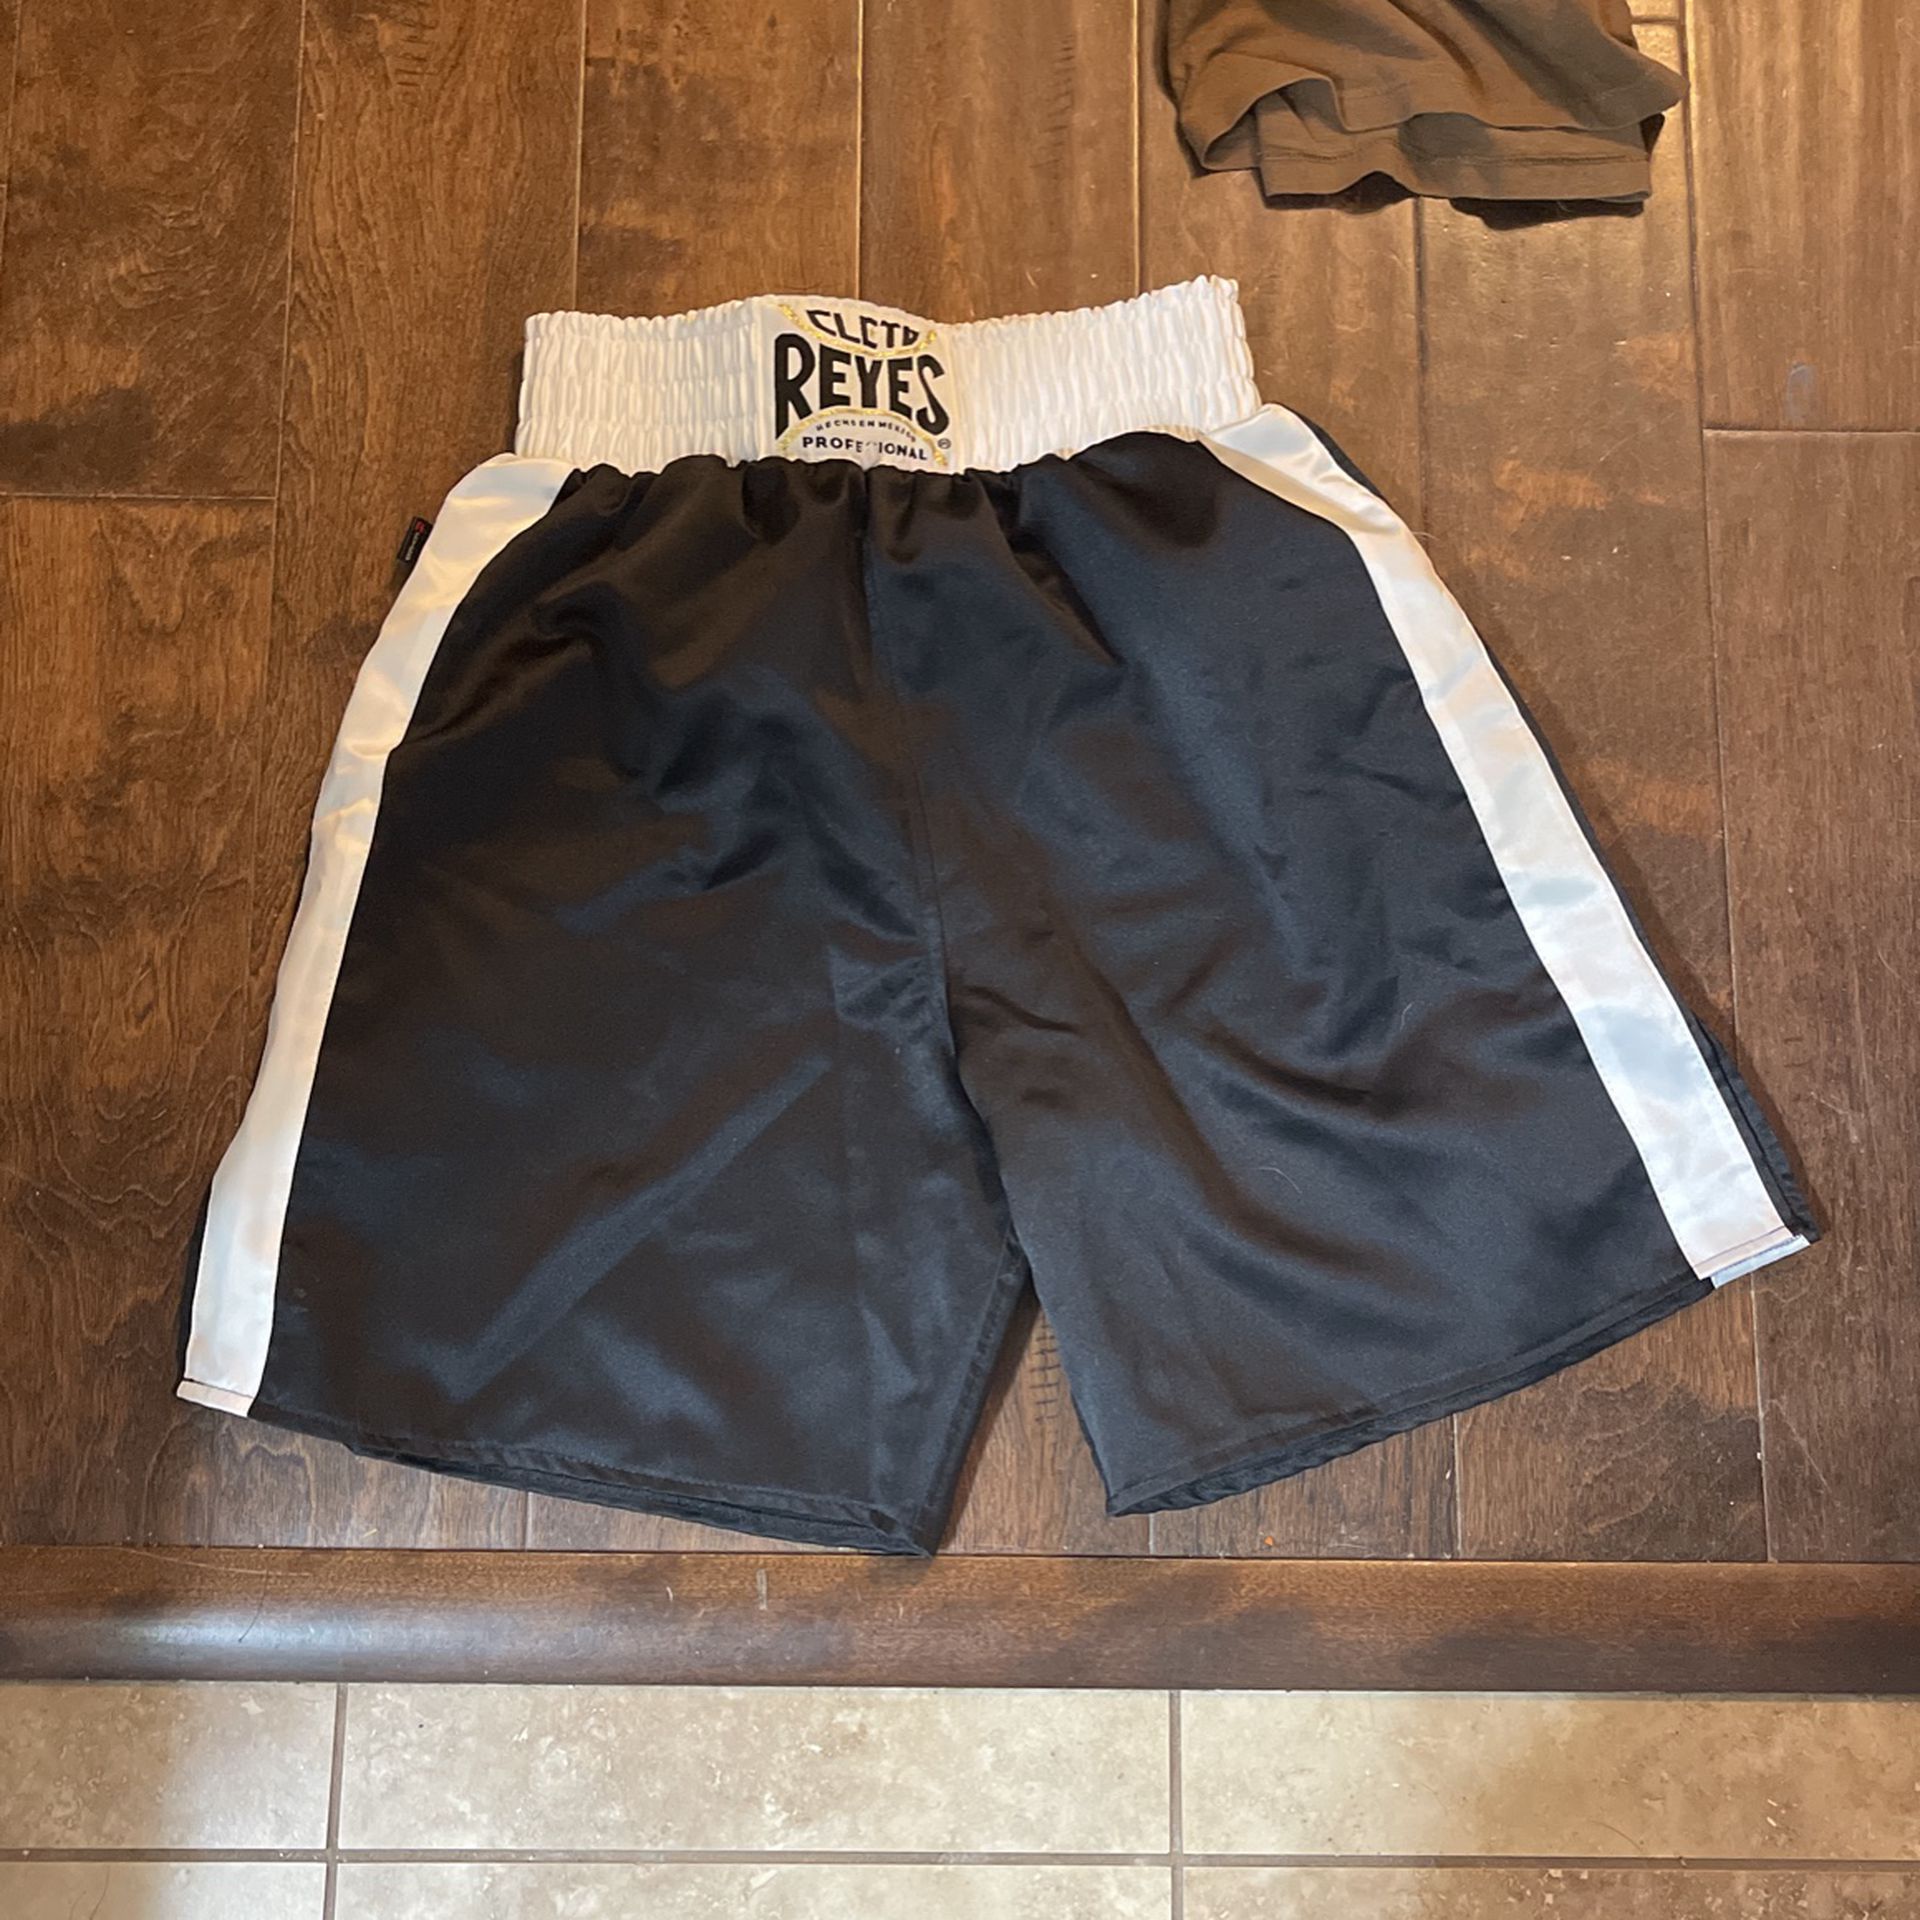 Cleto Reyes Boxing Shorts 